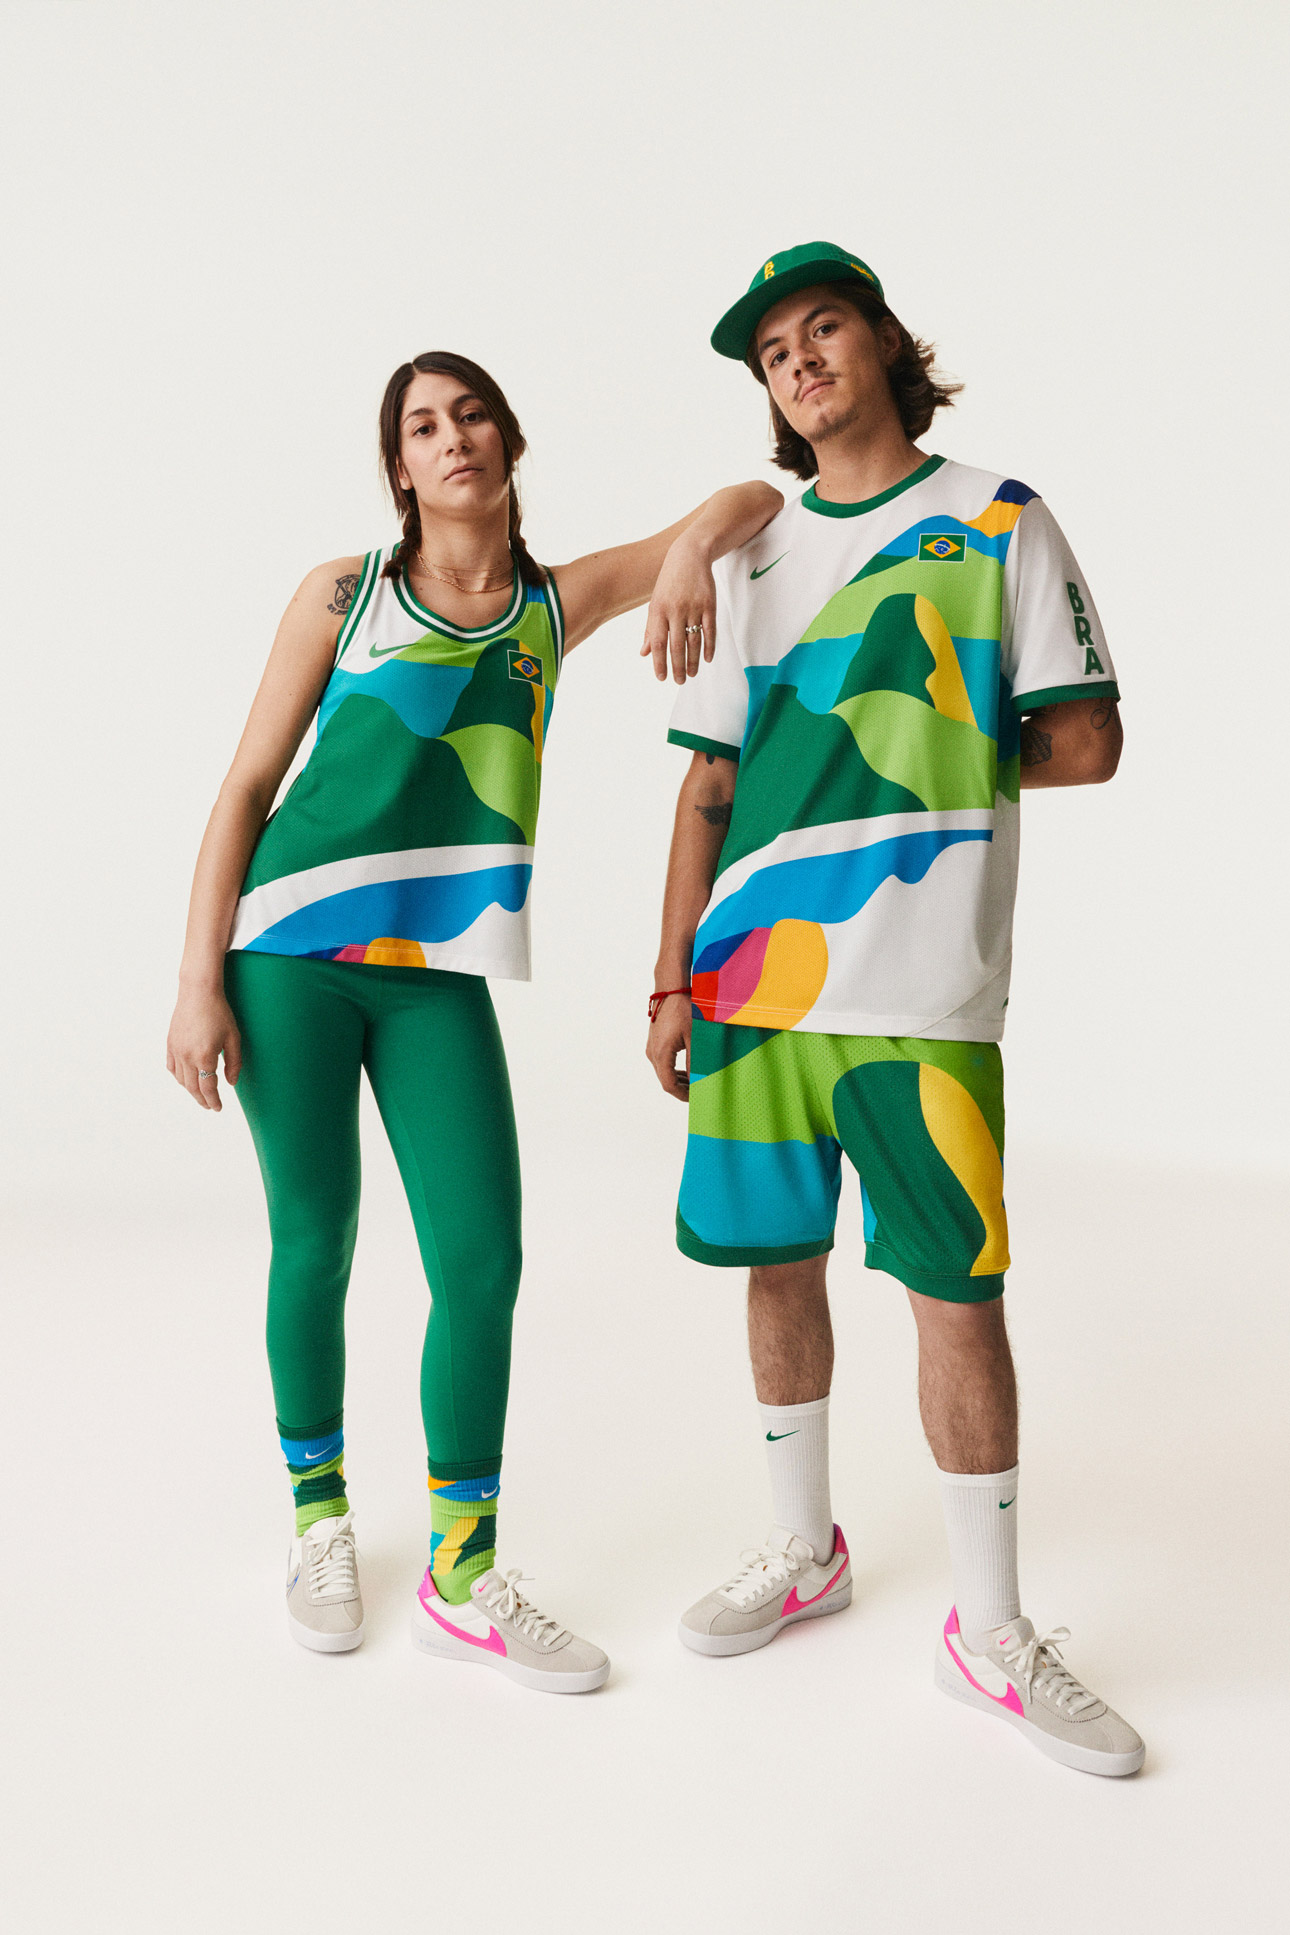 SB unveil Olympic skateboarding uniforms - Yeah